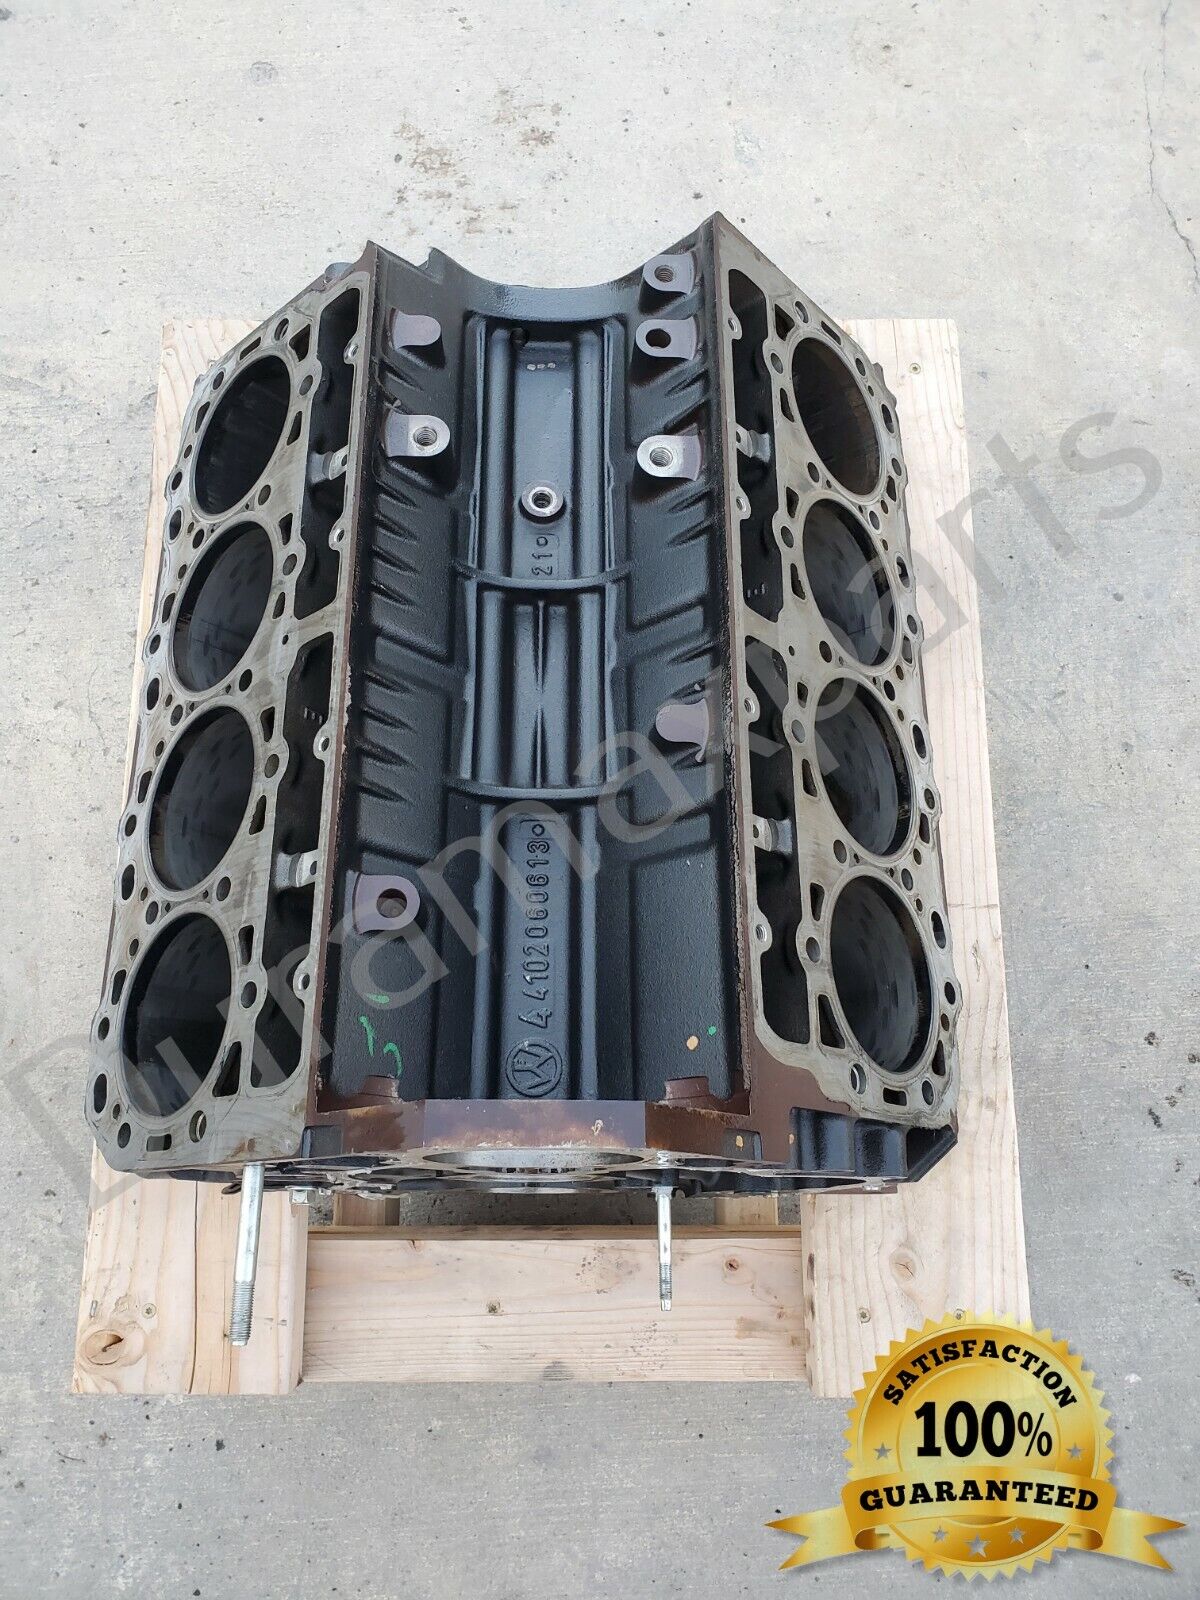 06-07 Chevy/GMC DURAMAX Diesel LBZ 6.6L BARE REBUILDABLE ENGINE BLOCK 97377917